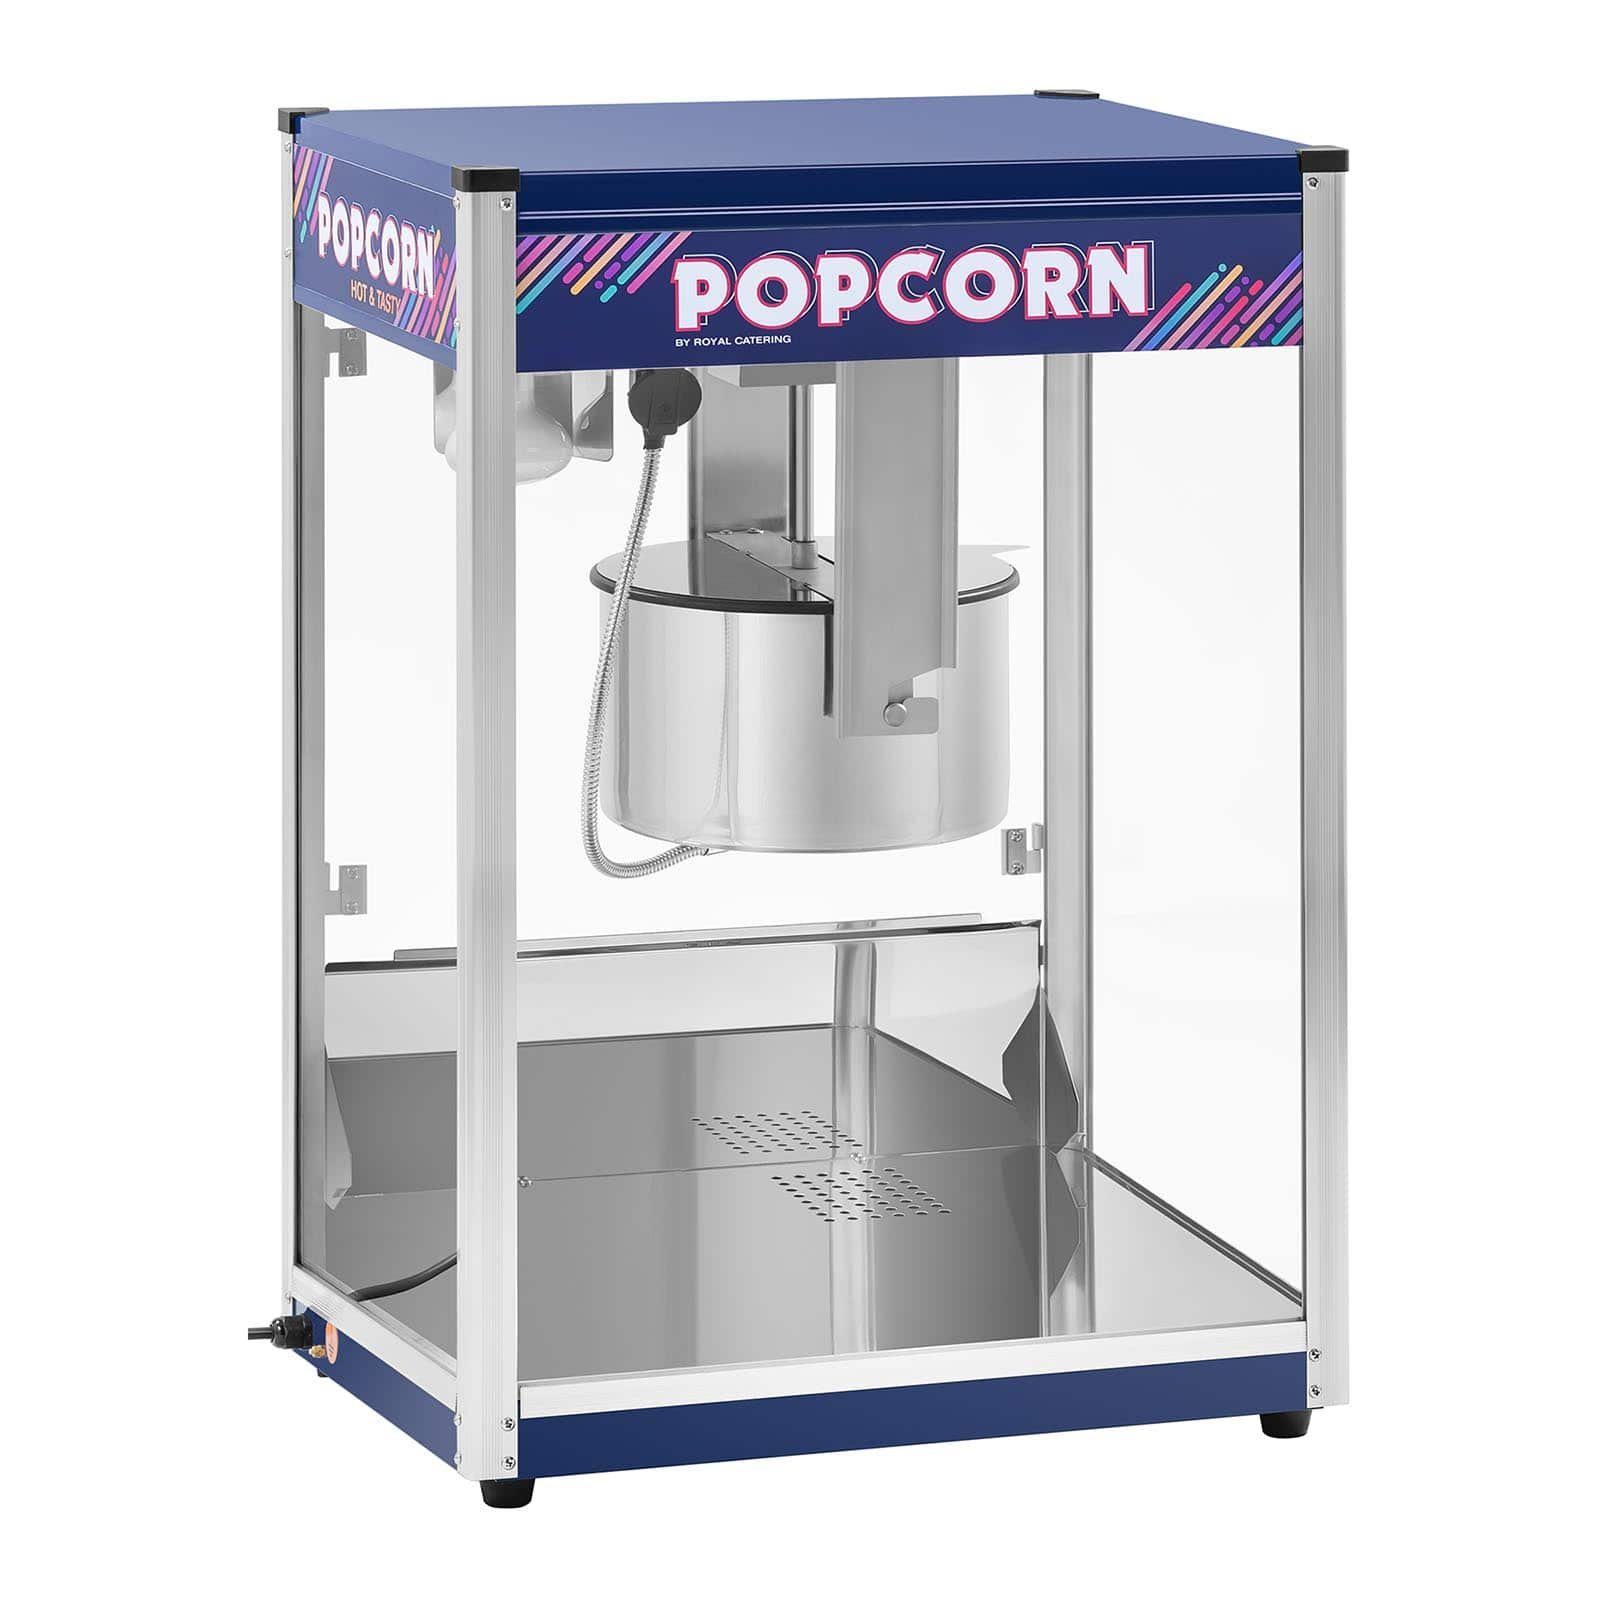 Royal Catering Popcornmaschine Popcornmaker Popcorn Popcornmaschine Maschine Maker Popcornautomat